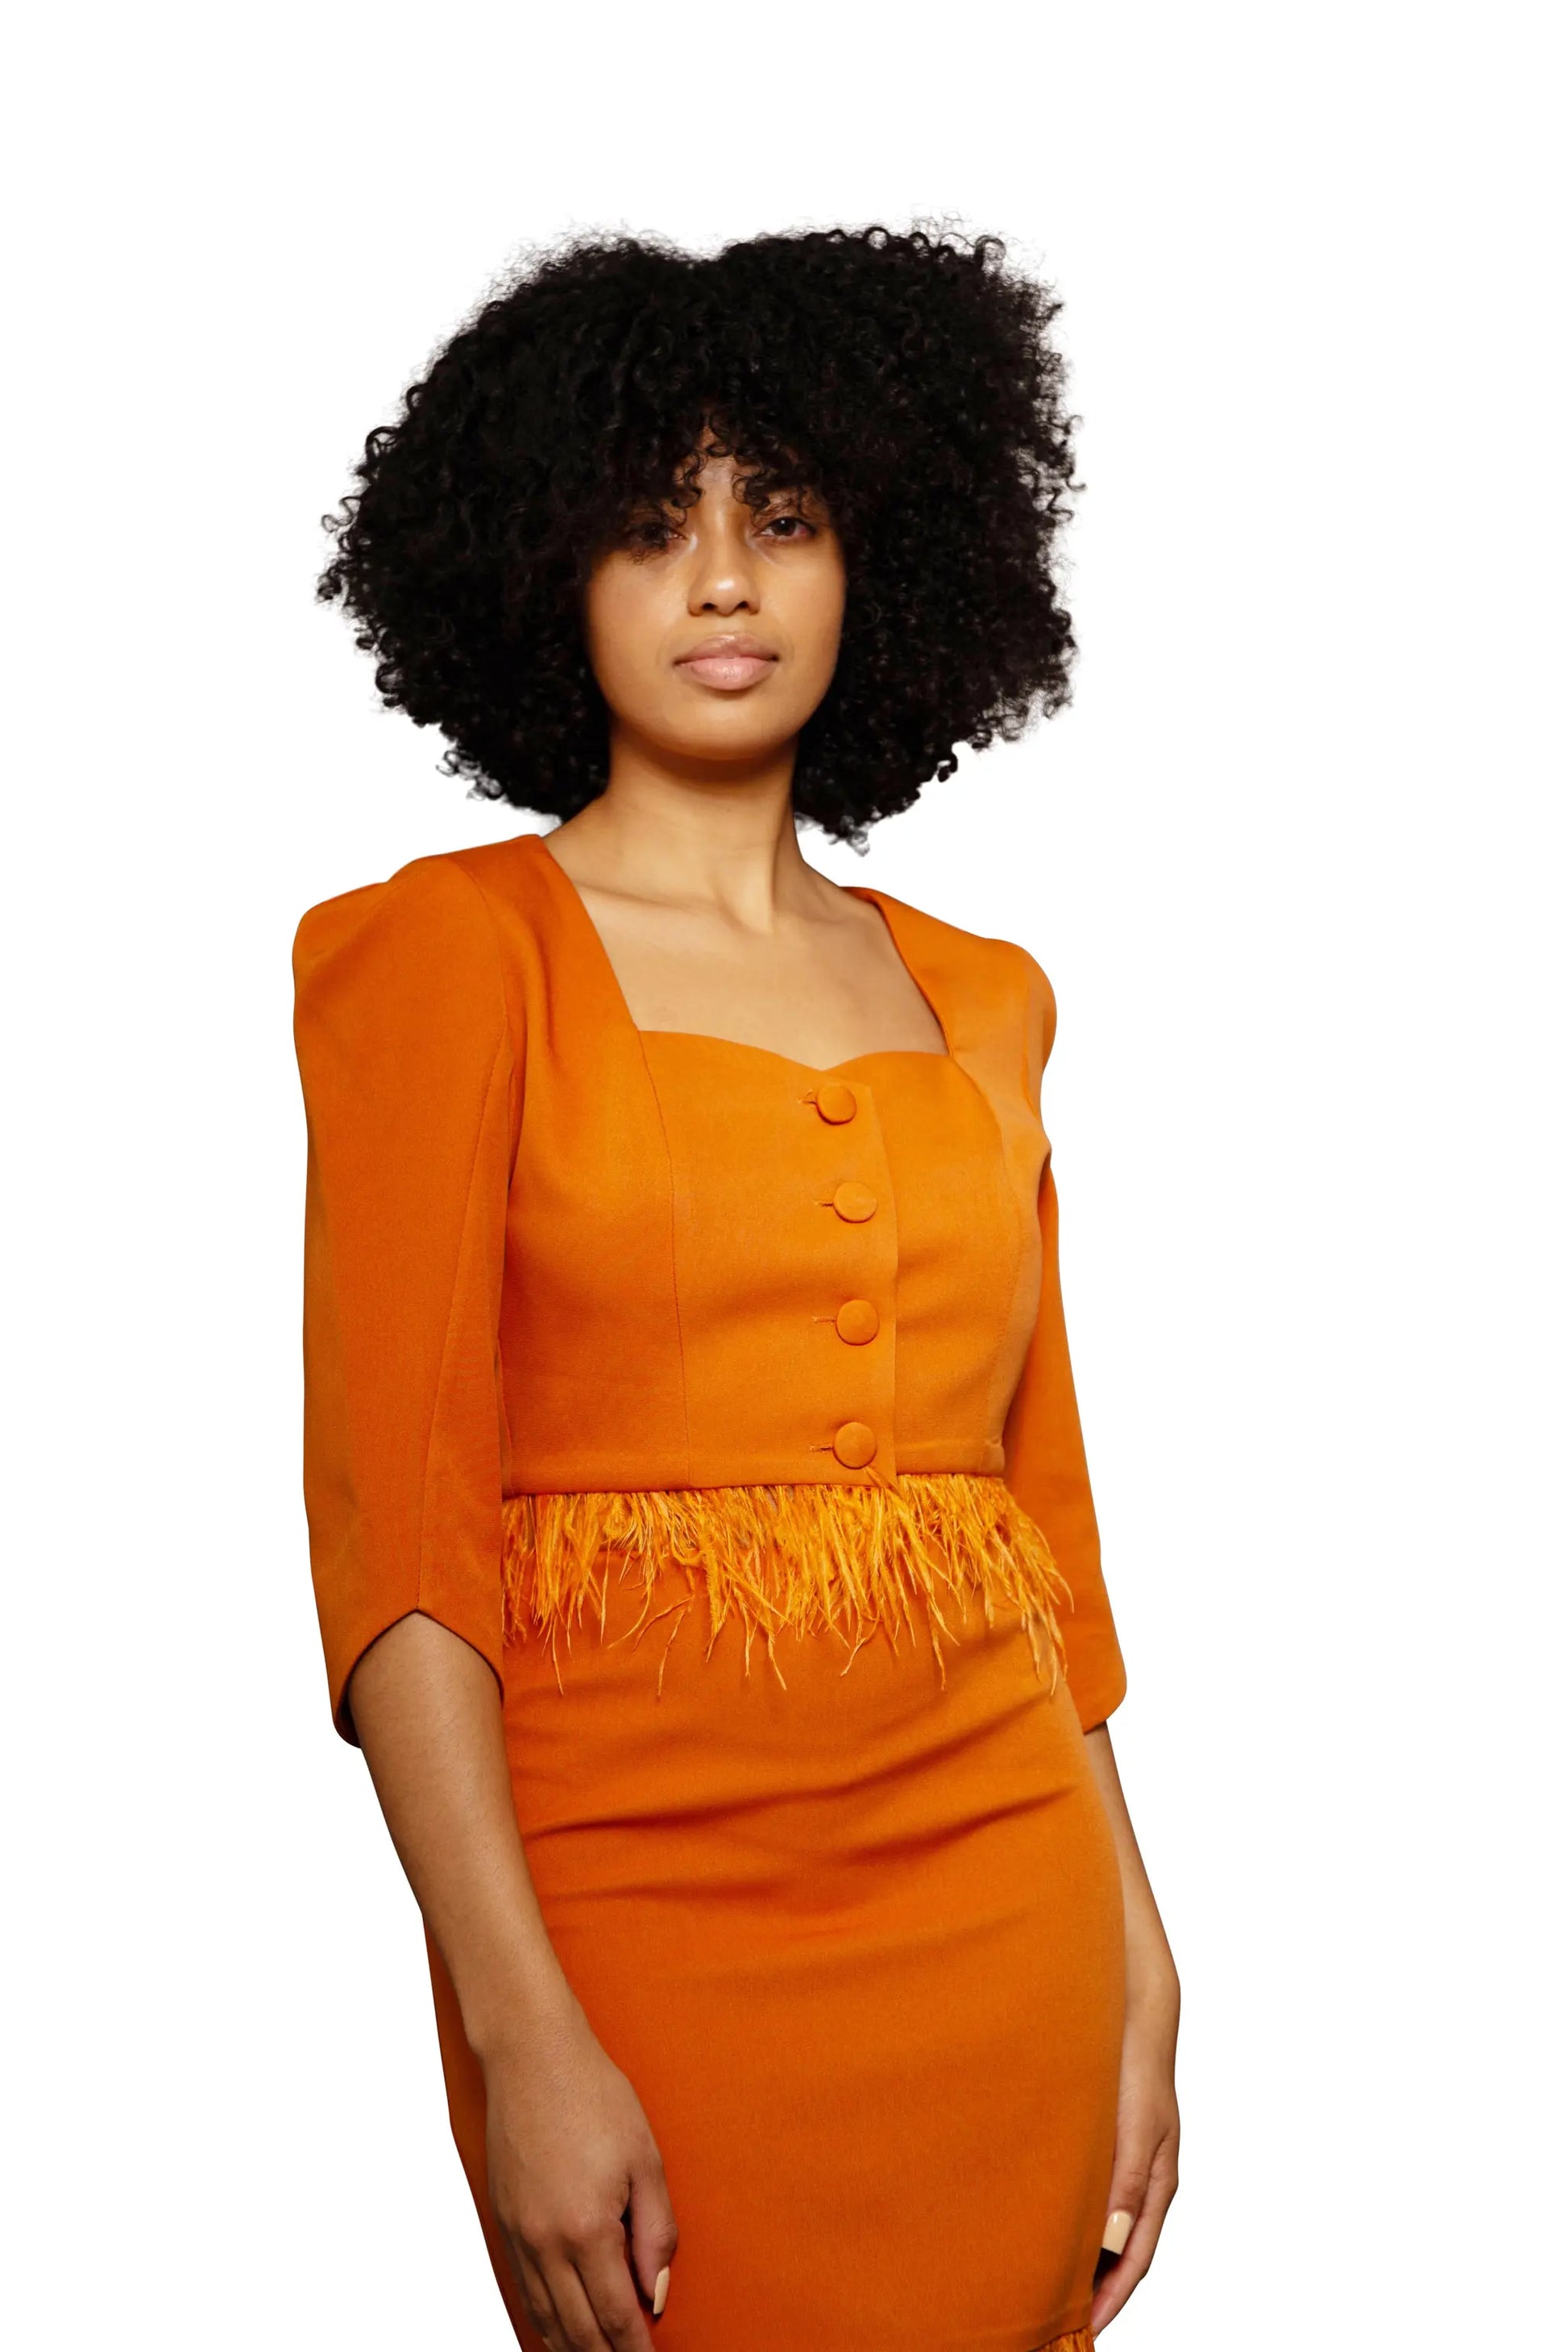 Model wearing an orange dress closeup